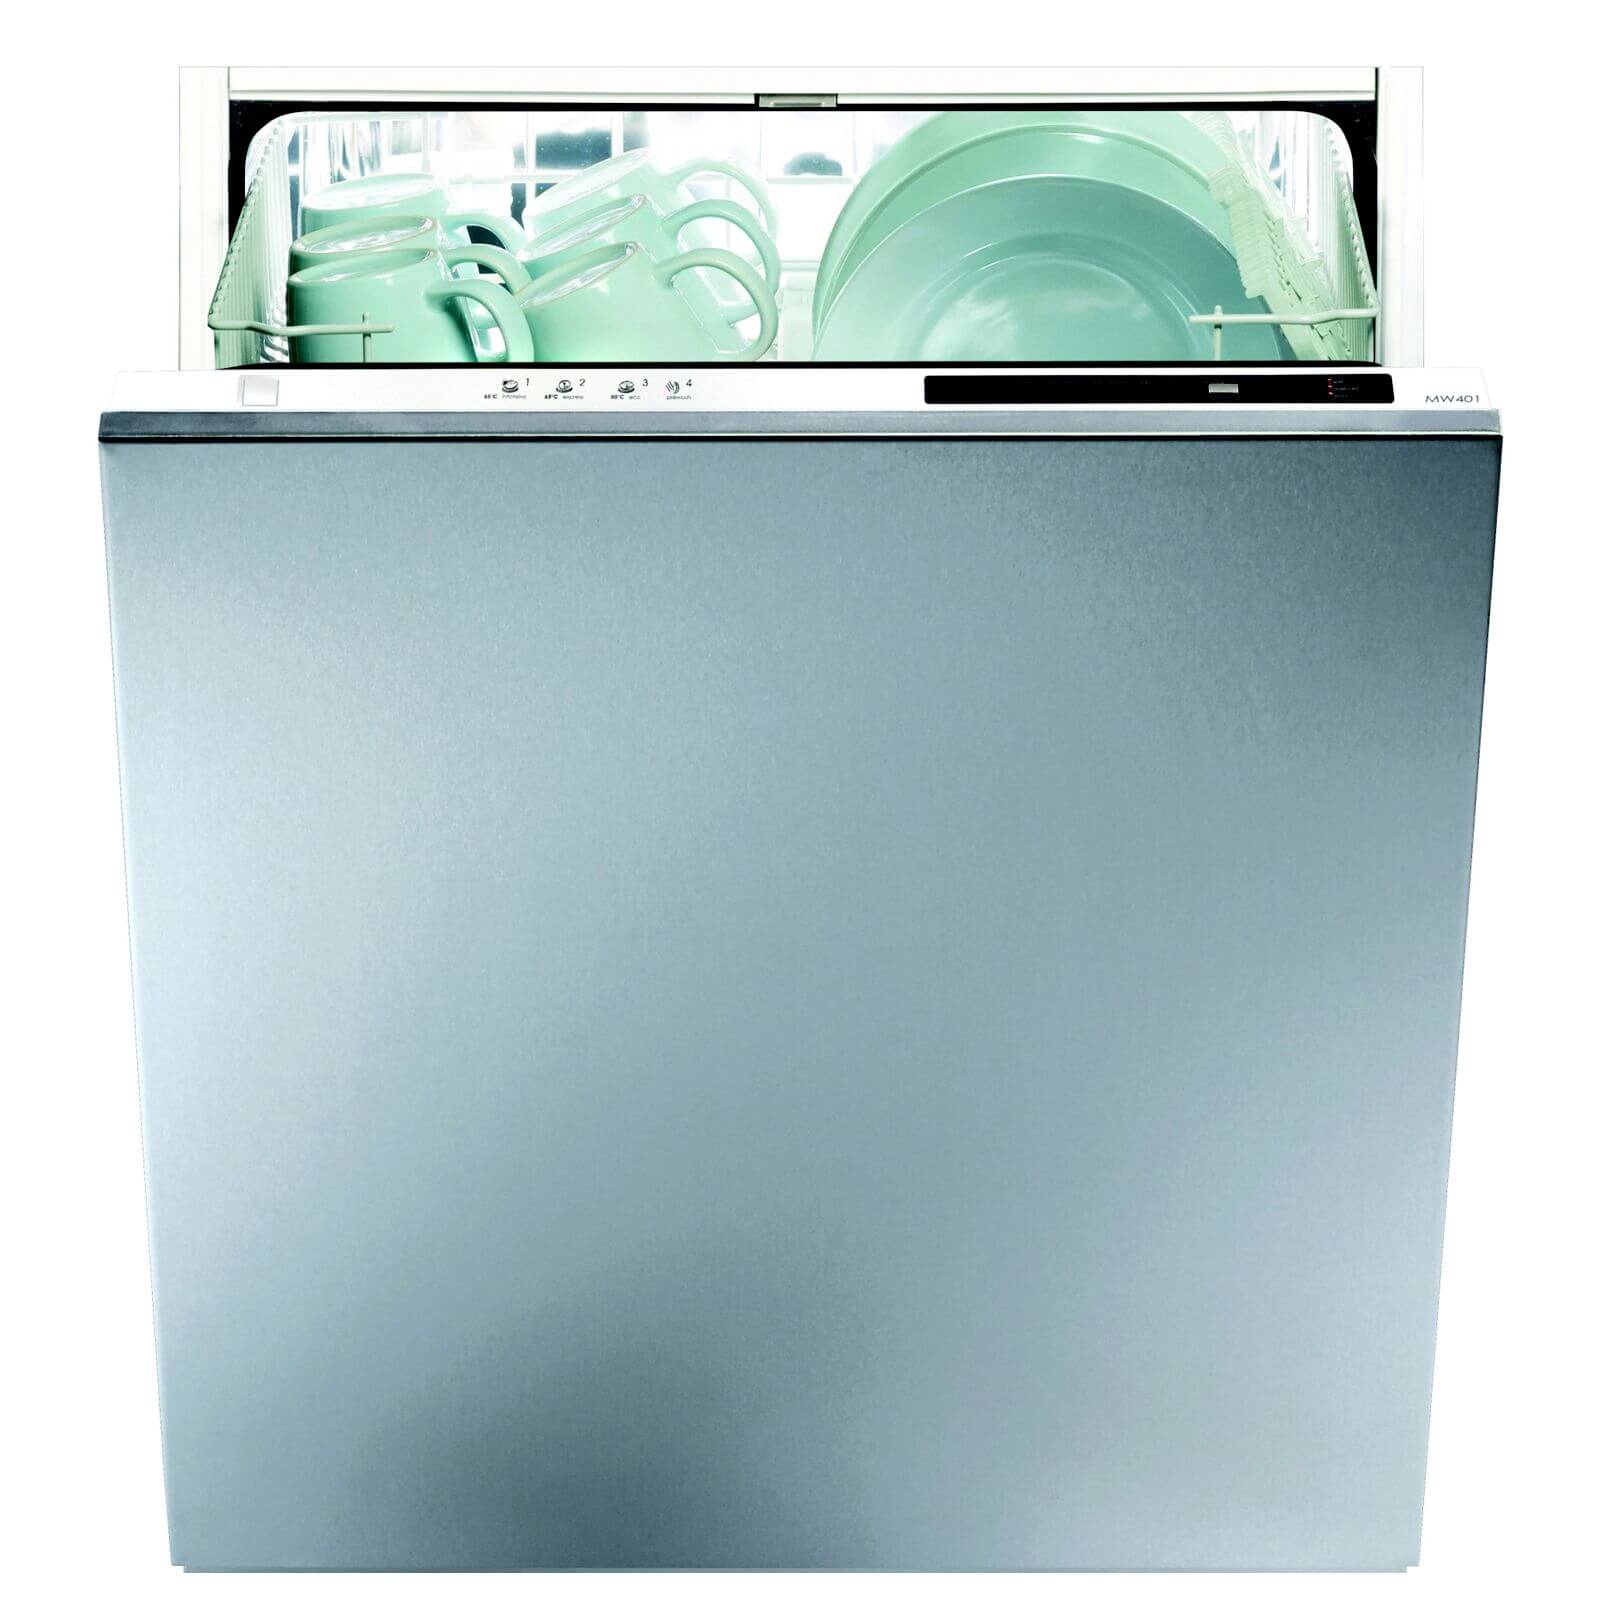 Matrix MW402 Integrated Dishwasher - 60cm